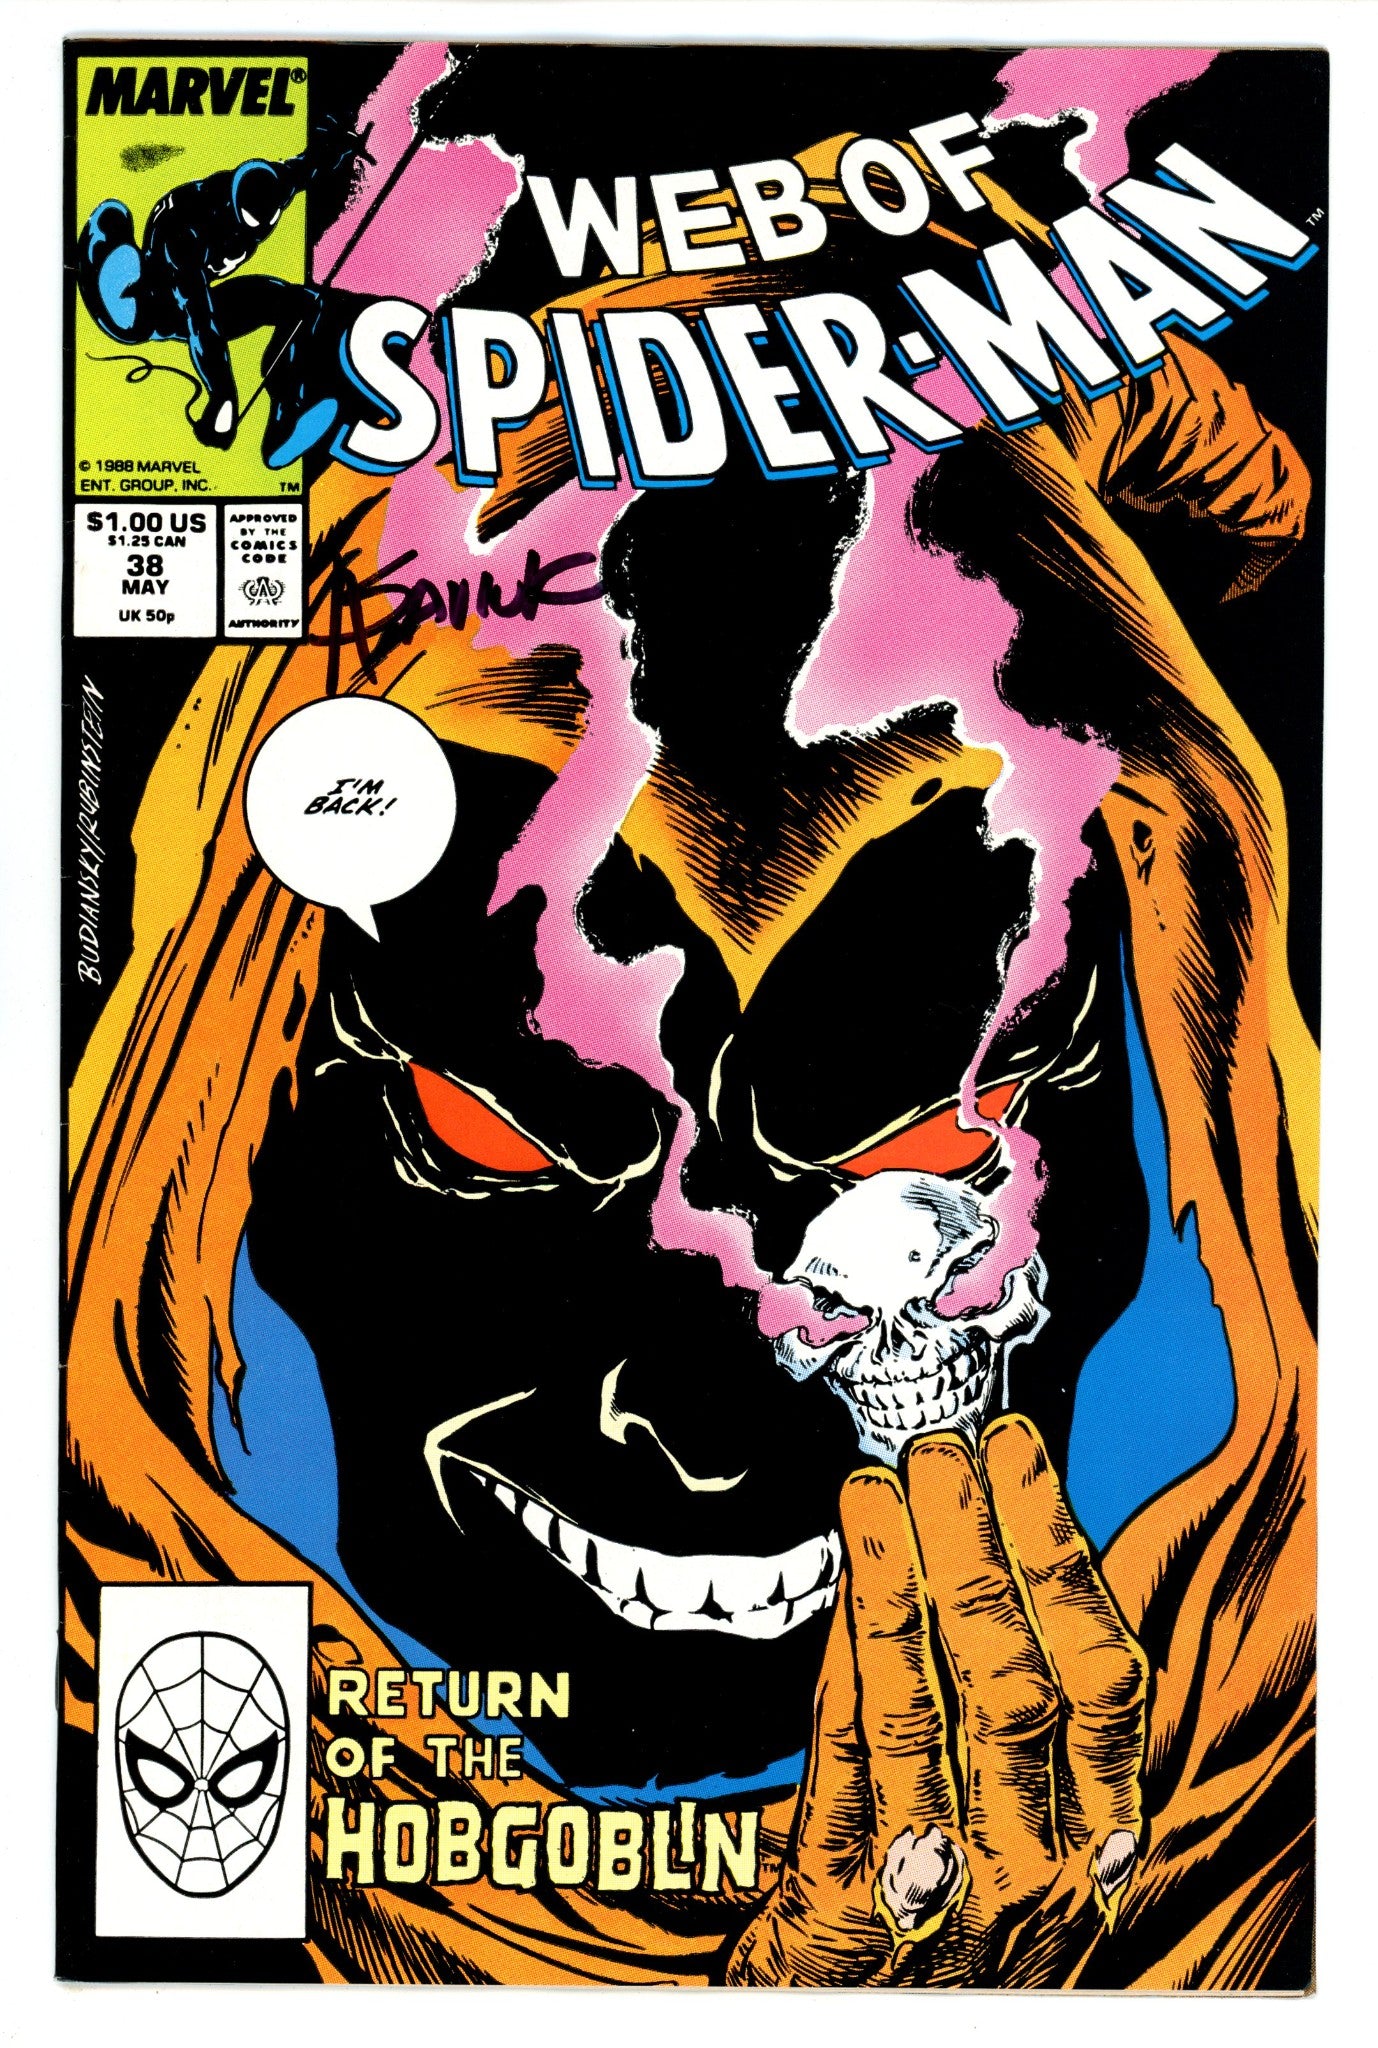 Web of Spider-Man Vol 1 38 VF- (7.5) (1988) Signed x1 Cover Alex Saviuk 